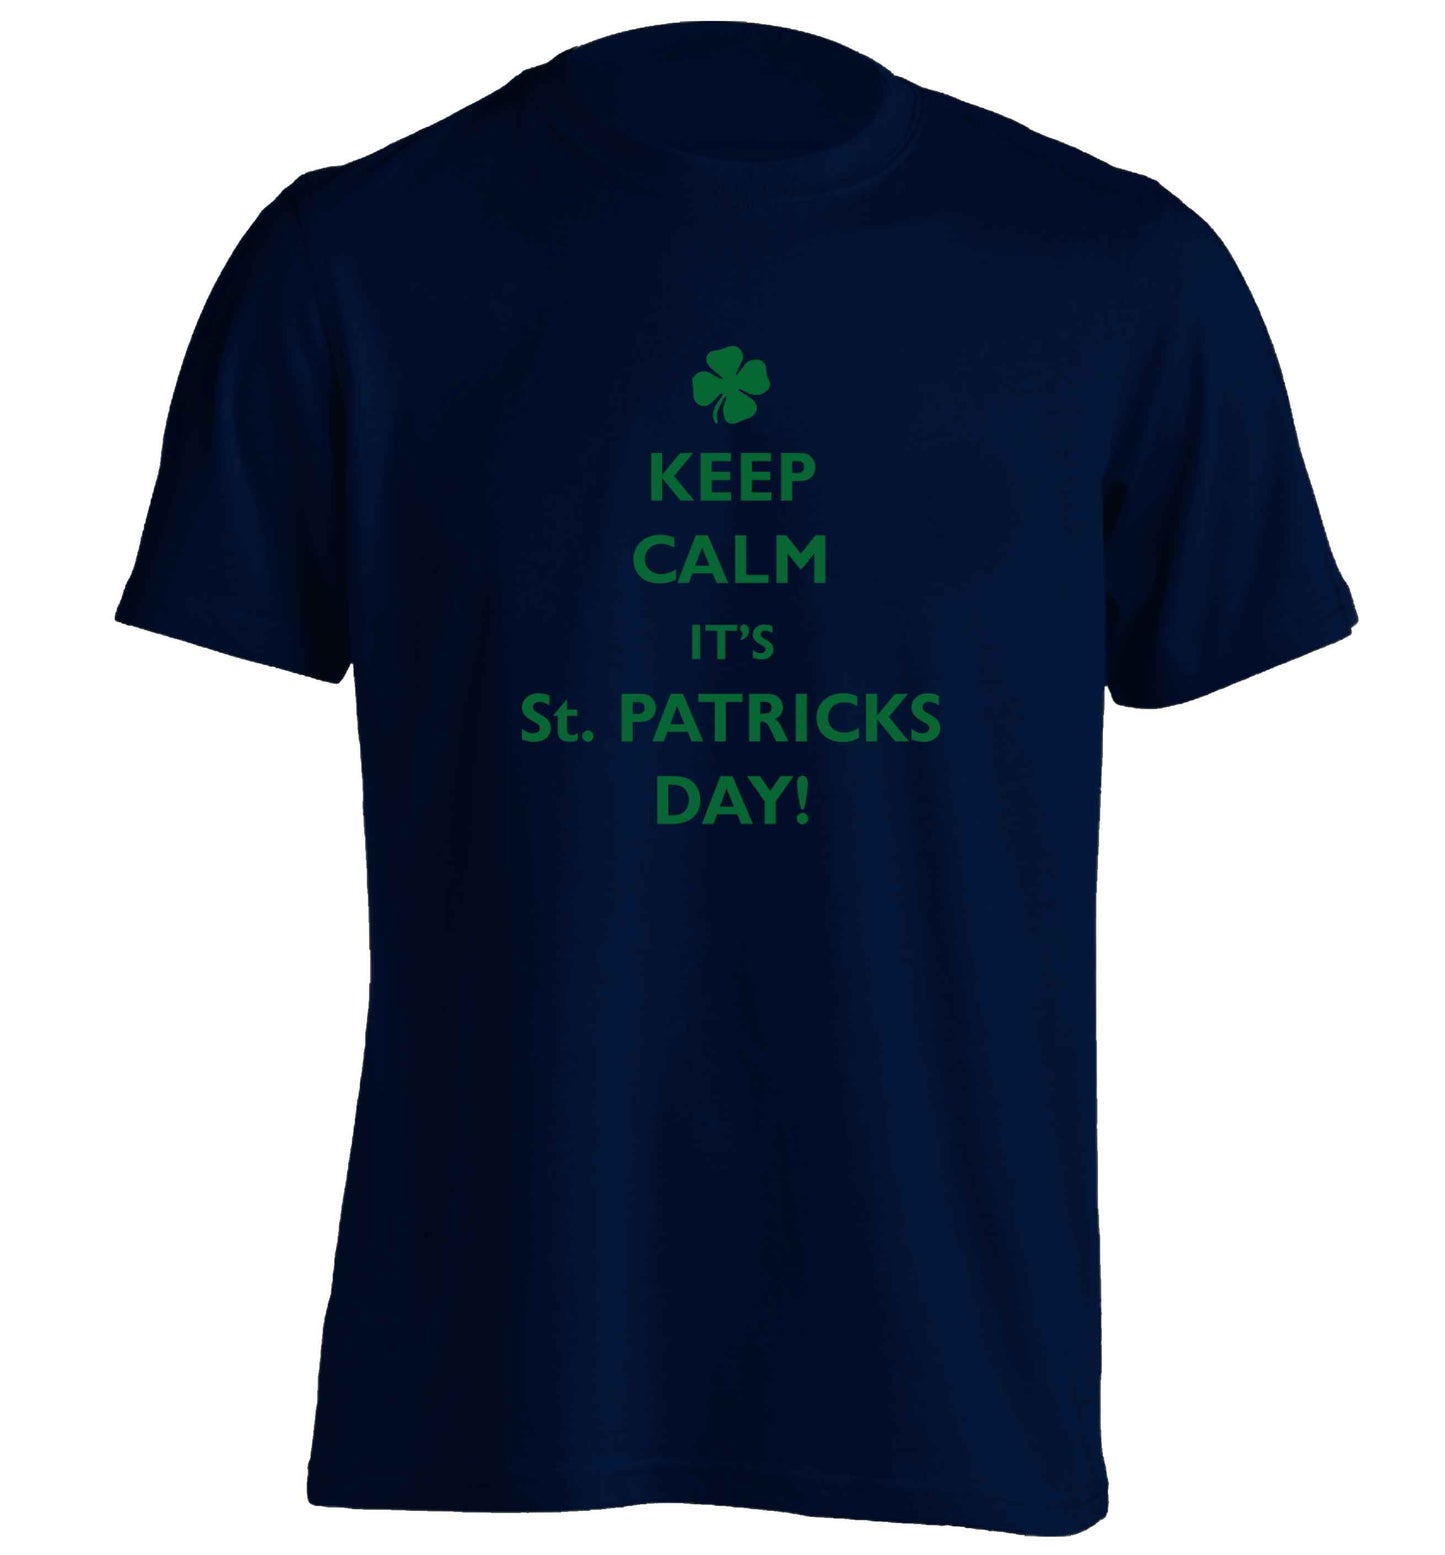 Keep calm it's St.Patricks day adults unisex navy Tshirt 2XL